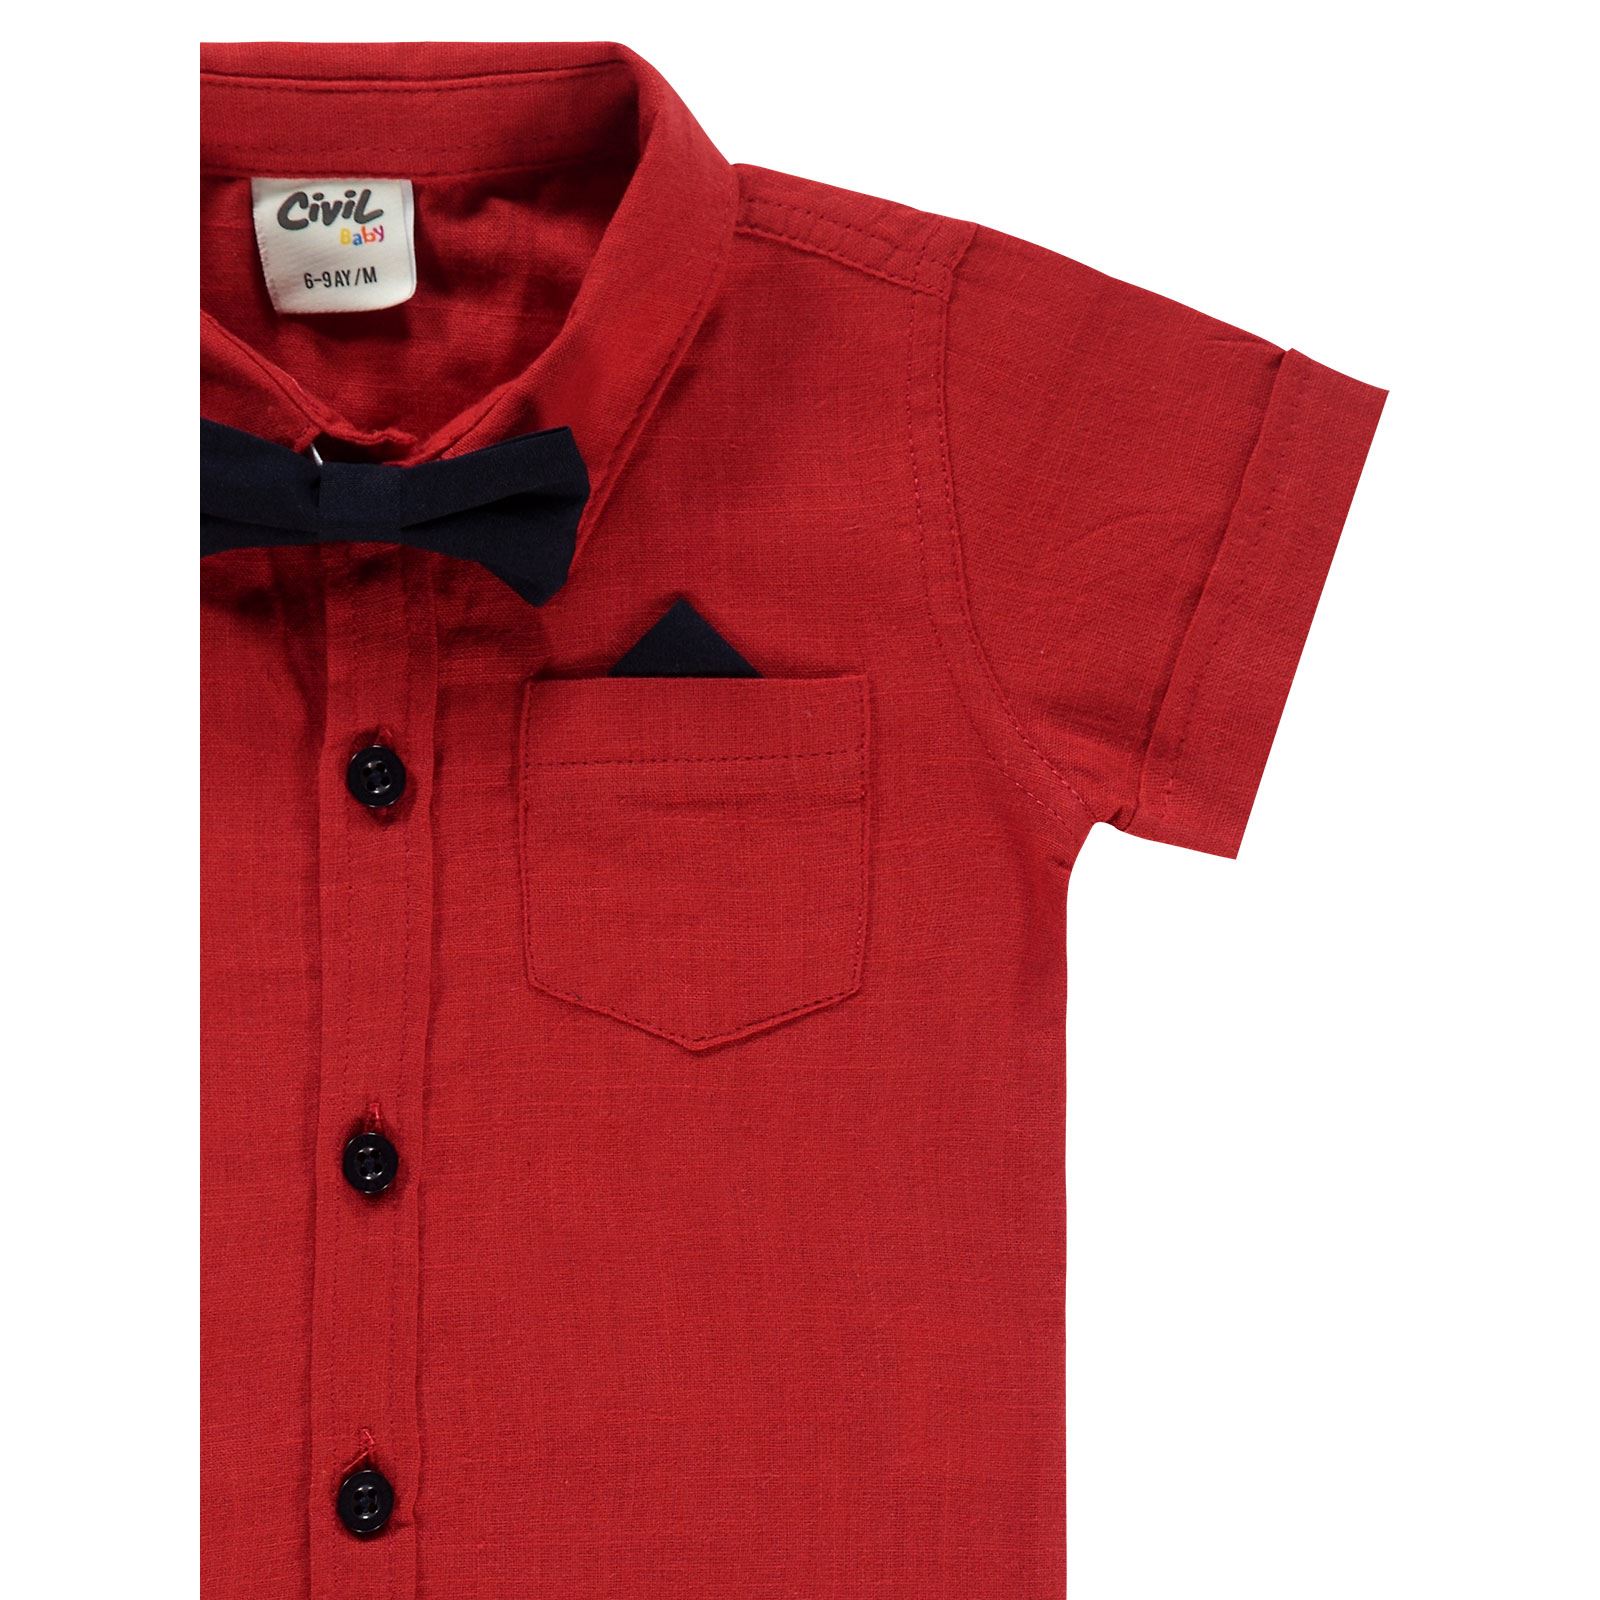 Civil Baby Erkek Bebek Papyonlu Gömlek 6-18 Ay Kırmızı